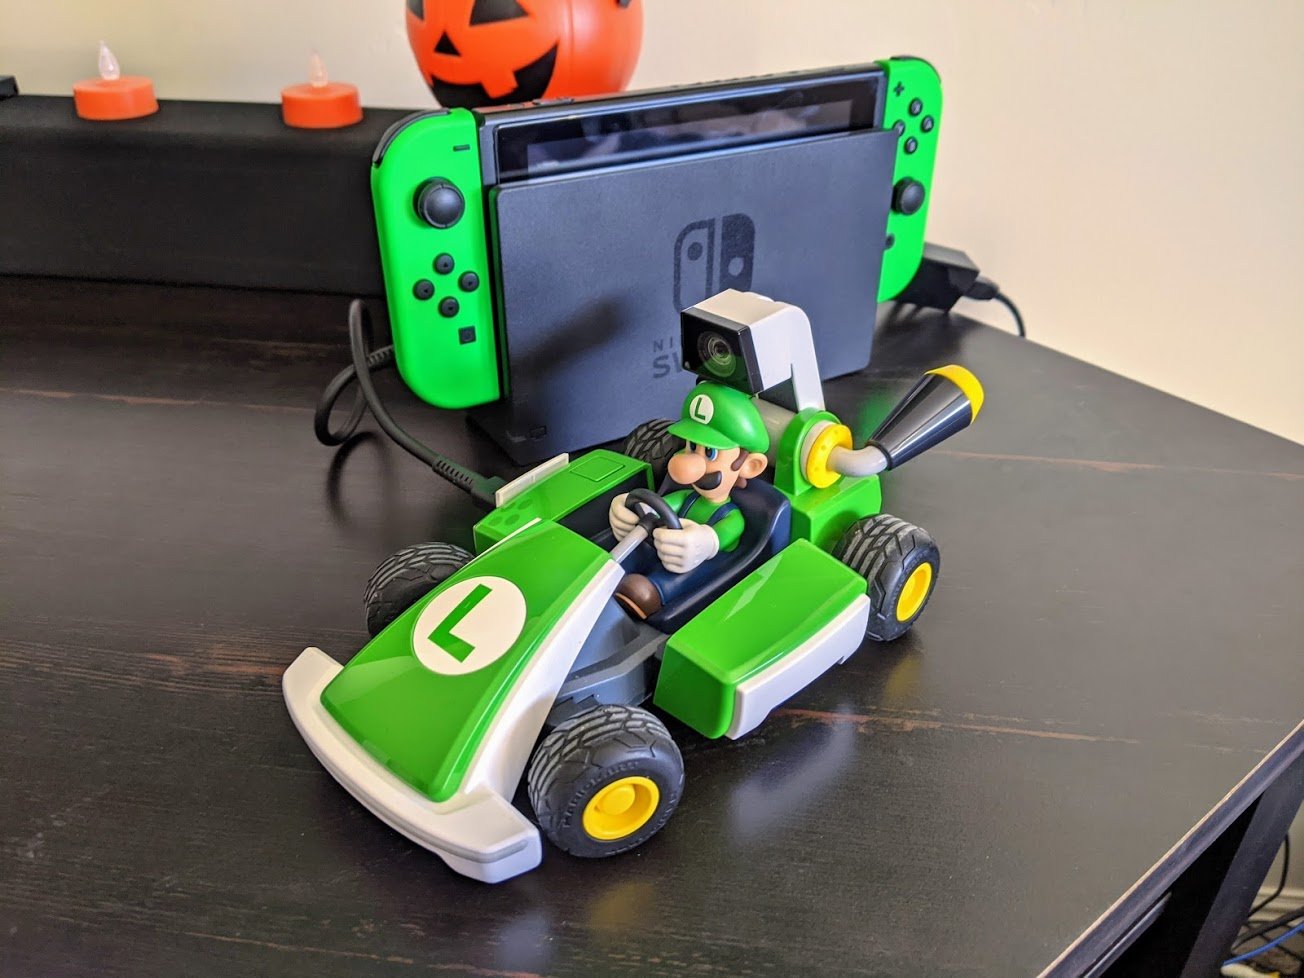 Mario Kart Live Luigi Charging With Switch Dock